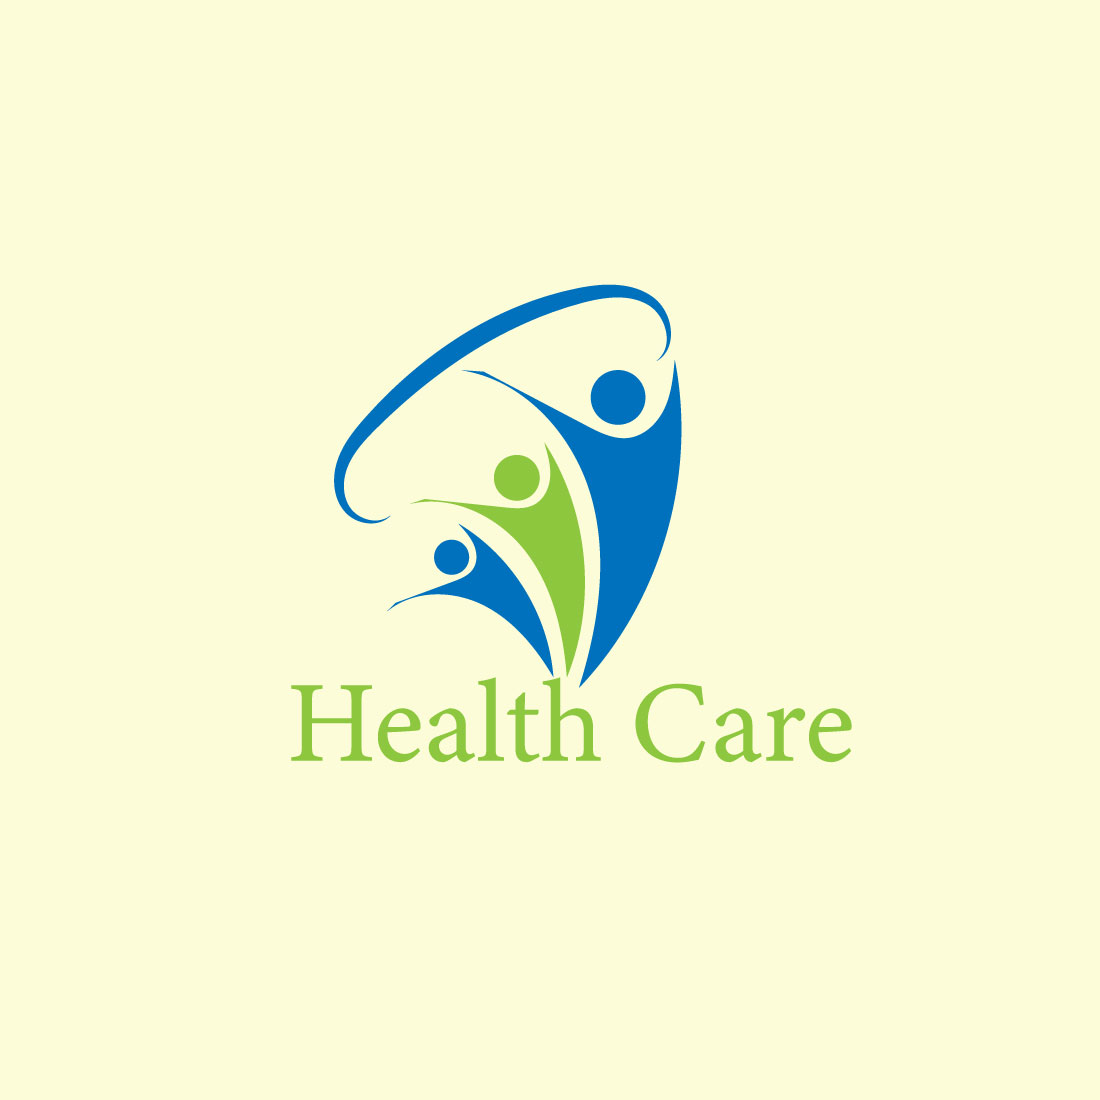 Free Medical Health Logo cover image.